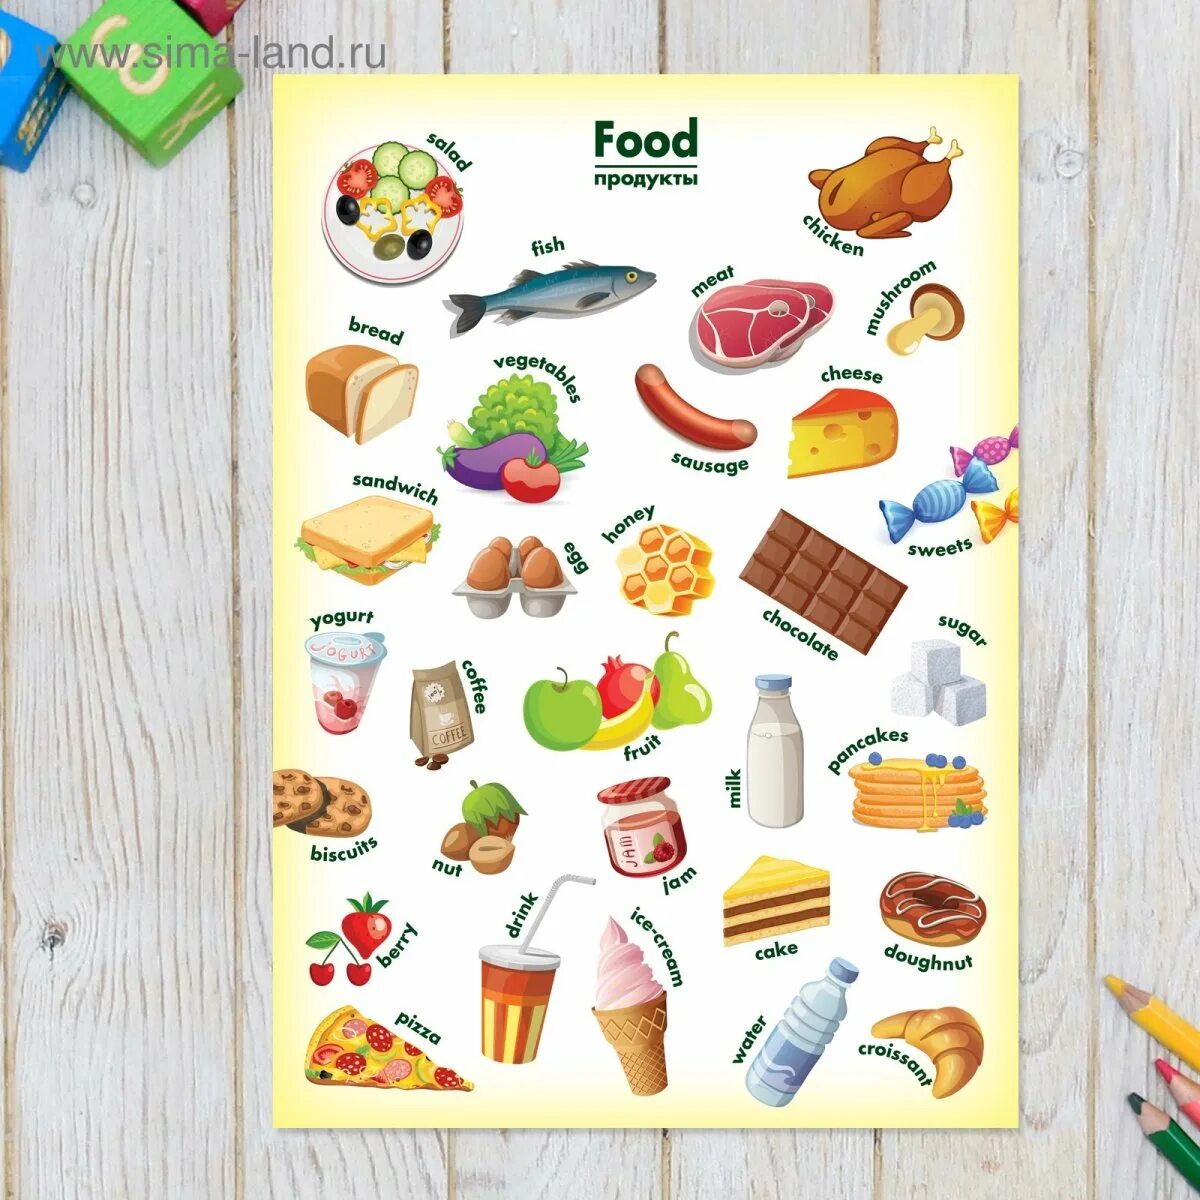 Карточки по теме еда. Карточки продуктов питания для детей. Продукты питания на английском. Карточки с продуктами на английском для детей. Название еды на английском